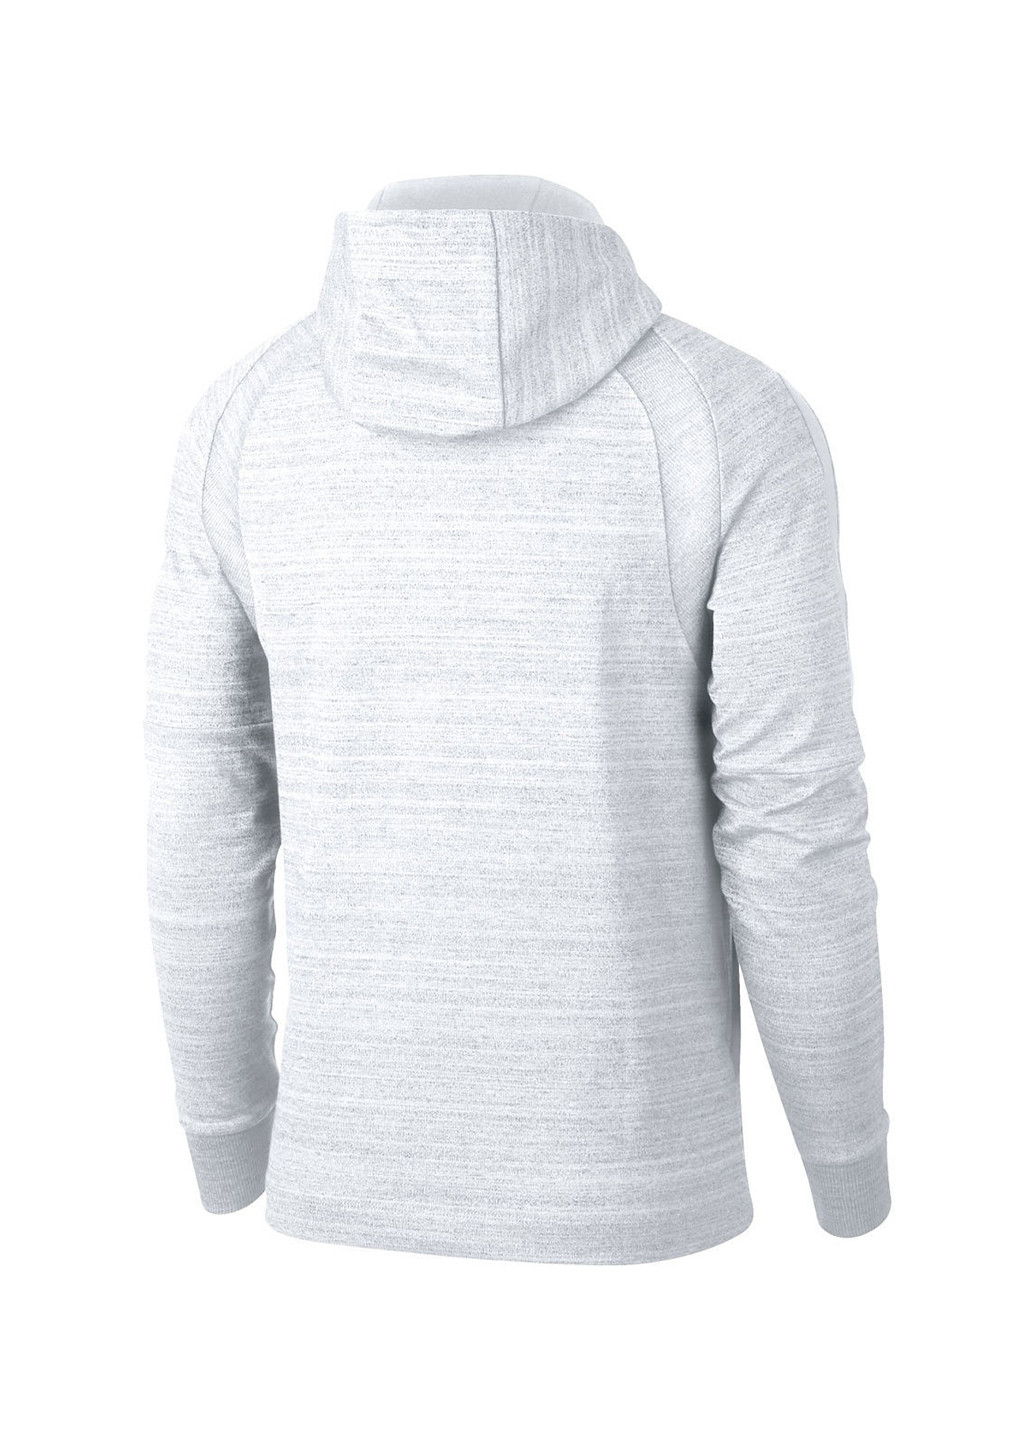 Толстовка Nike m nsw hoodie fz av15 knit (199148959)